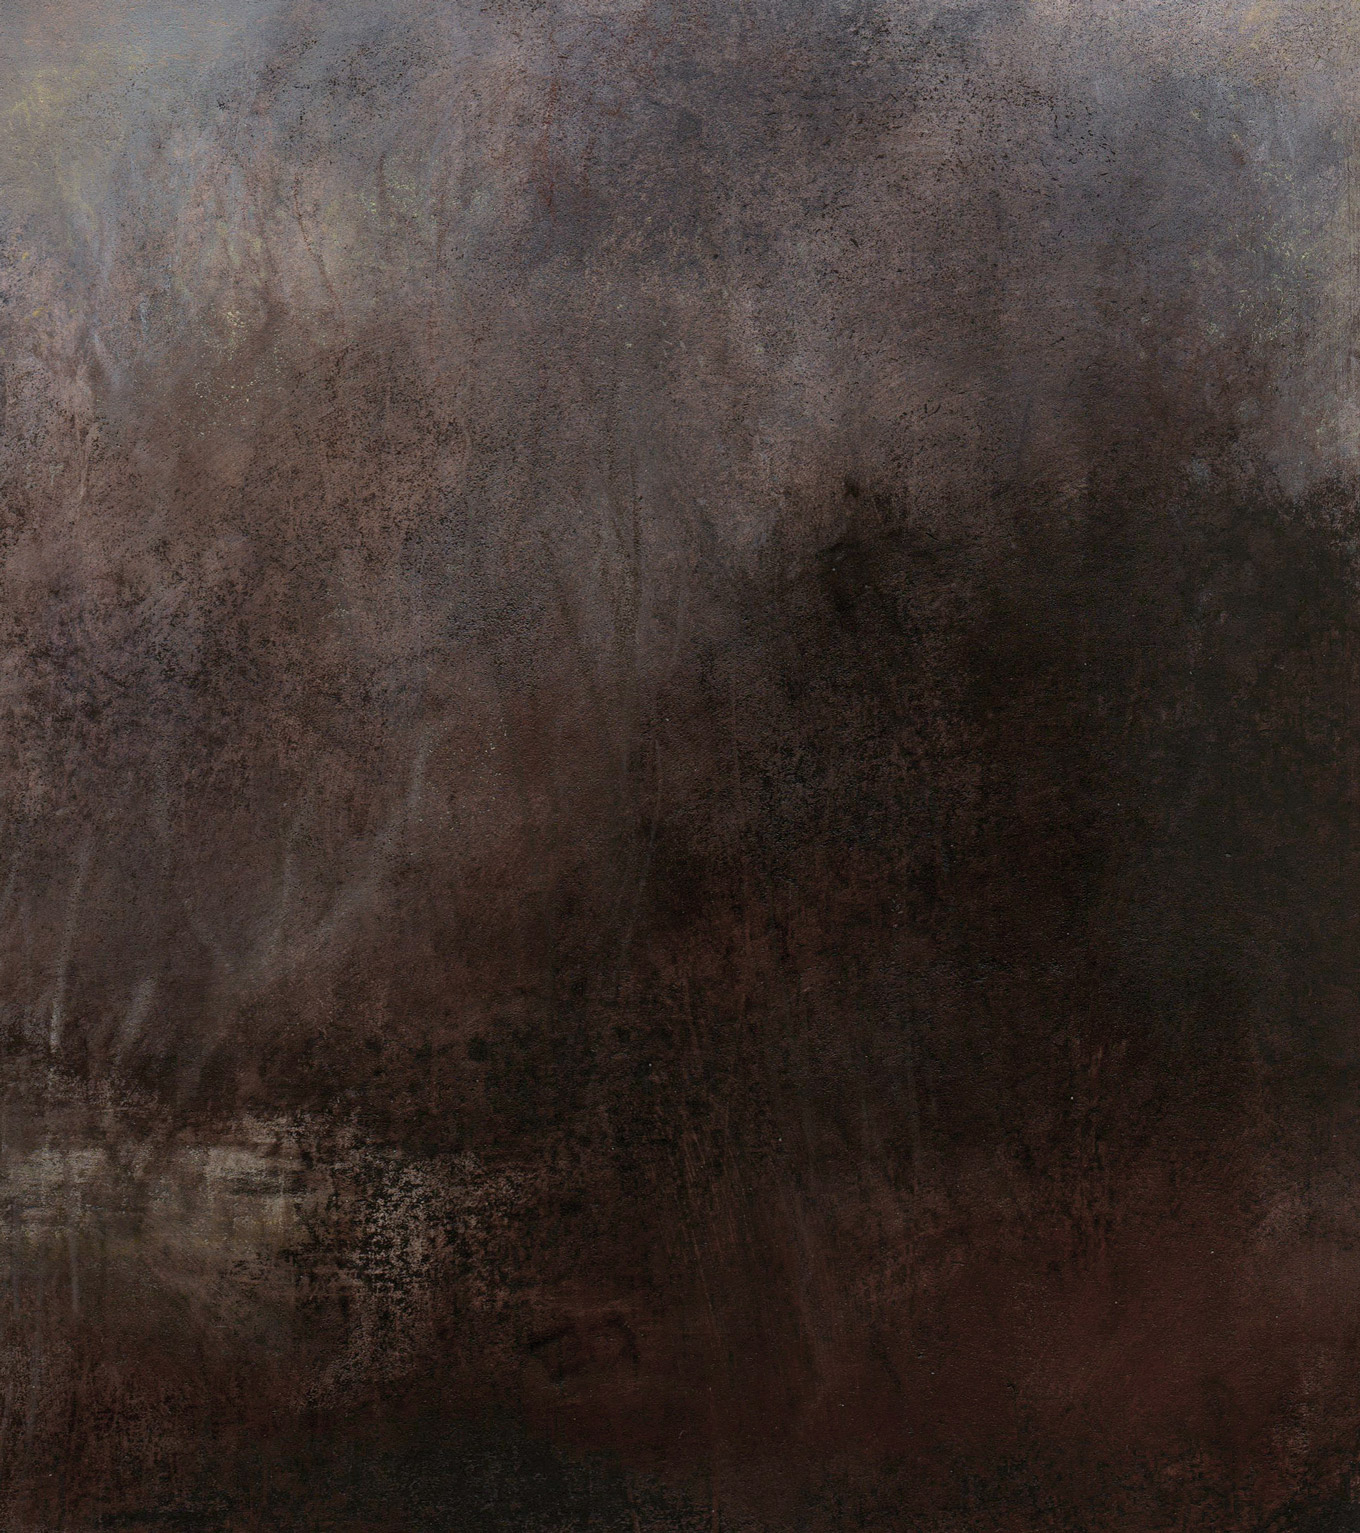 L1262 - Nicholas Herbert, British Artist, mixed media landscape painting of Mermaid Pond, Aspley Wood, 2021